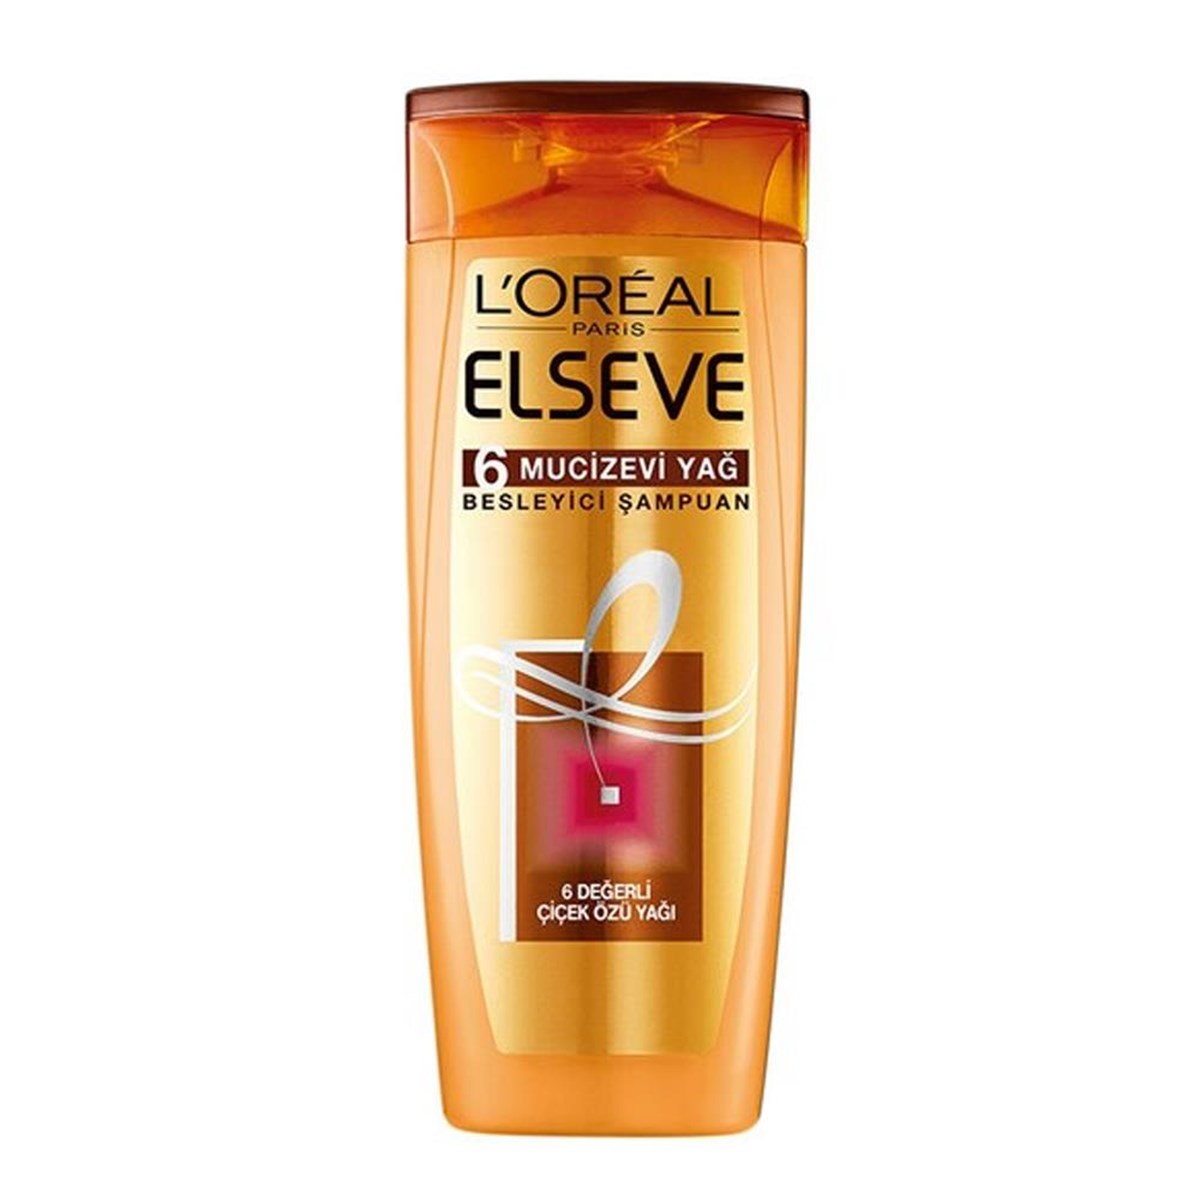 L'Oréal Paris Elseve Shampoo 6 Miraculous Oil 400 ml.-LeylekKapida.com